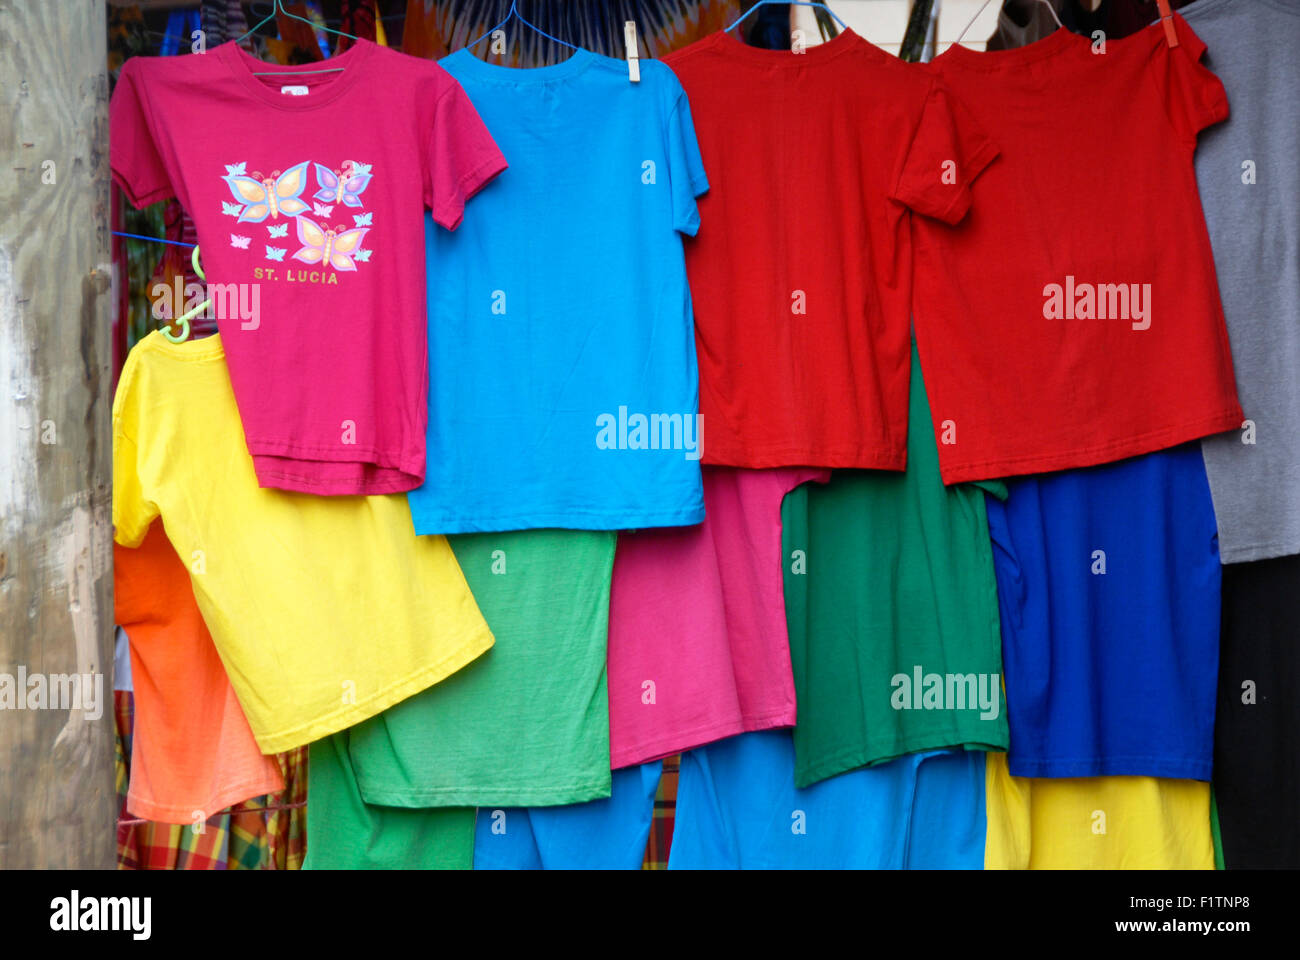 Garments on street stall, St Lucia, Caribbean Stock Photo